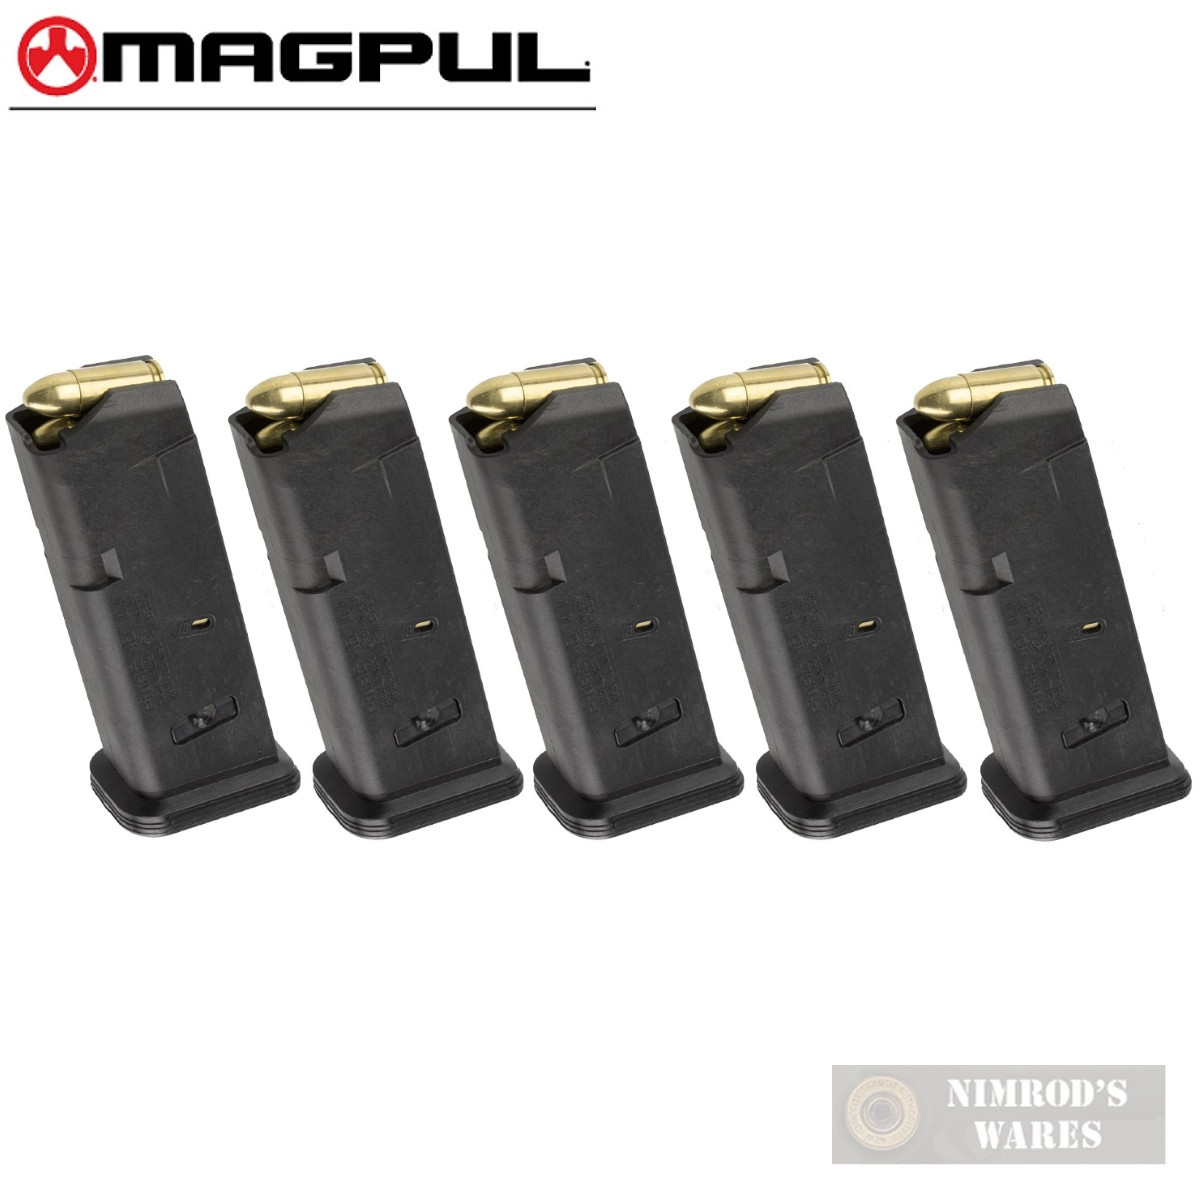 2 MAGPUL Glock 26 Magazines 10rd 9mm Mag